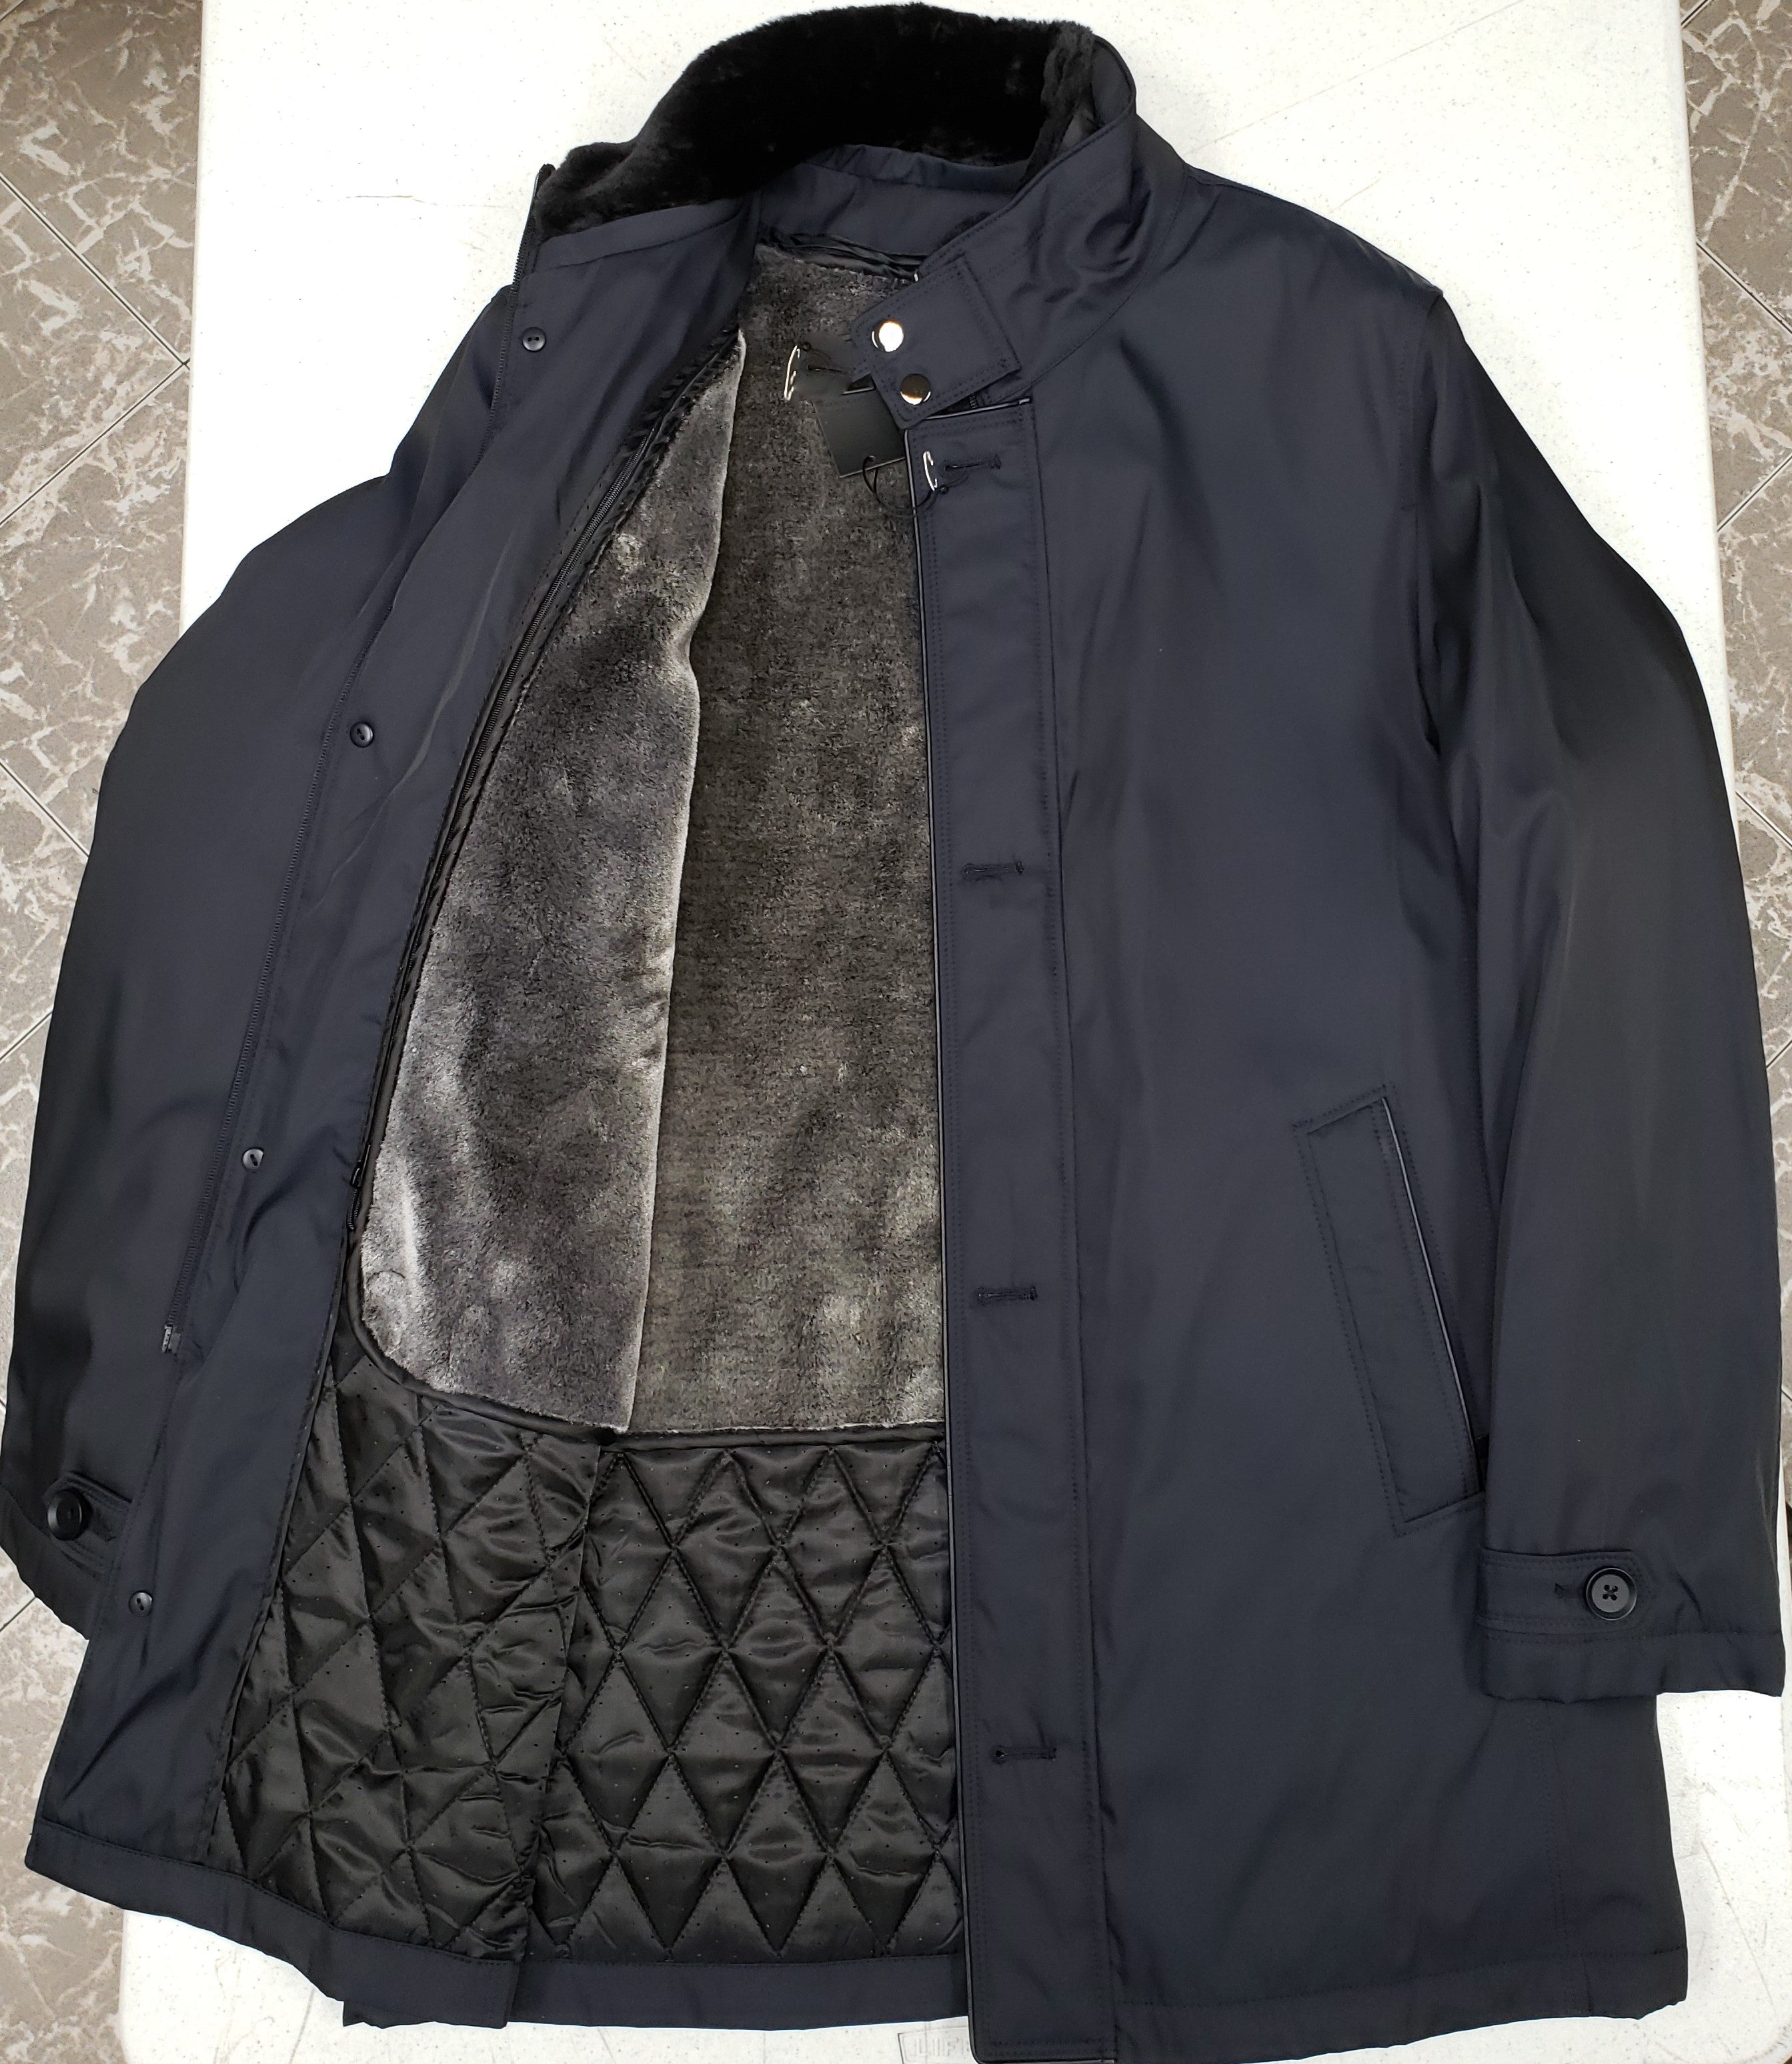 Luke - Navy 3/4 Nylon Coat w/ removable faux fur lining & inner collar